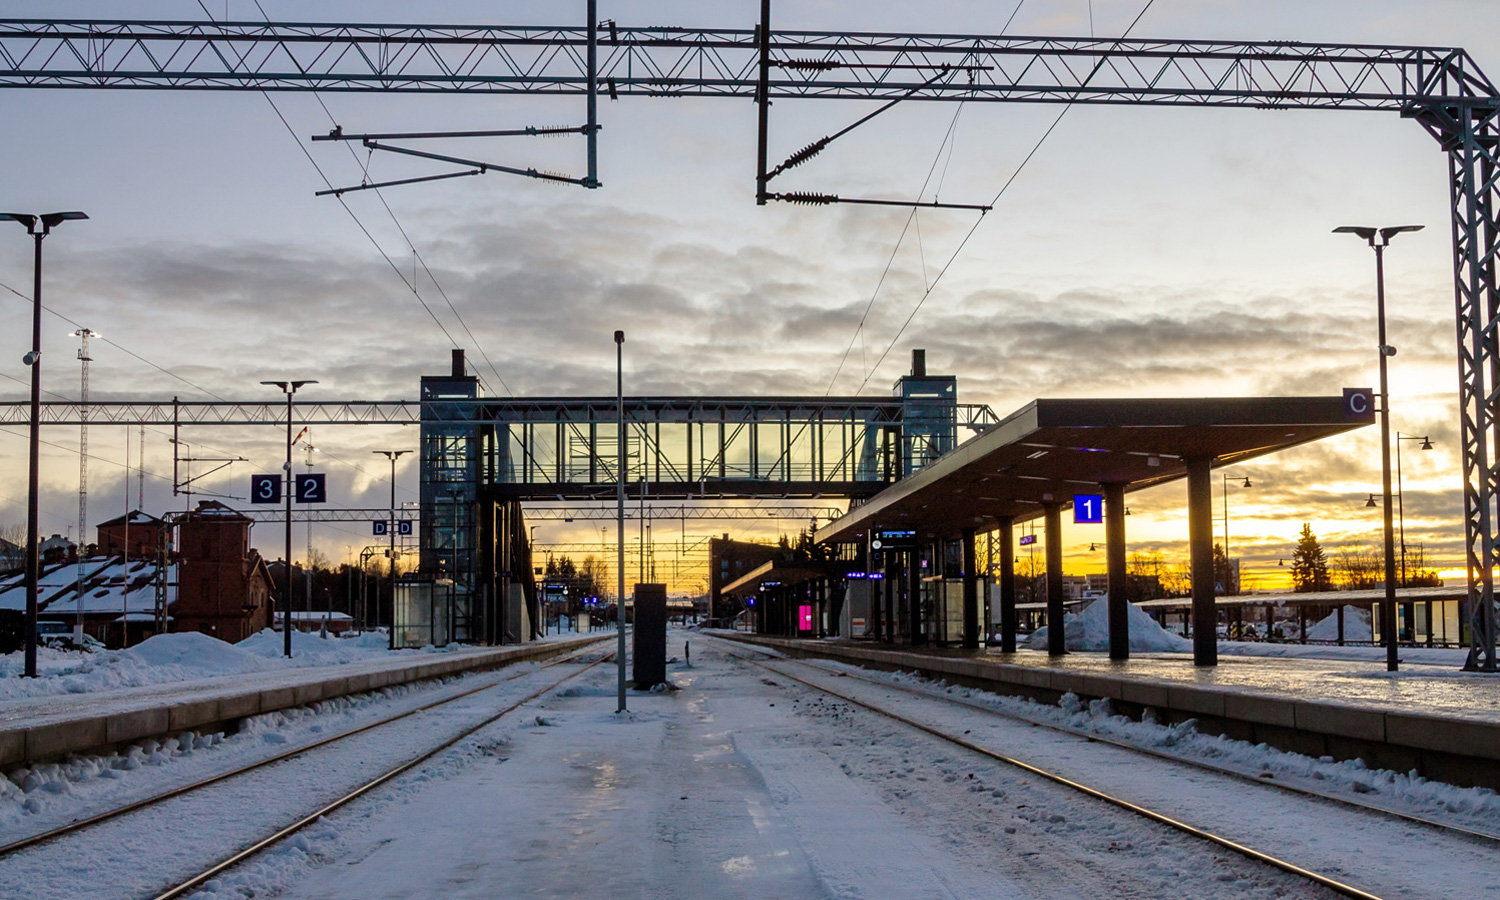 Finland railway — Stations & ways